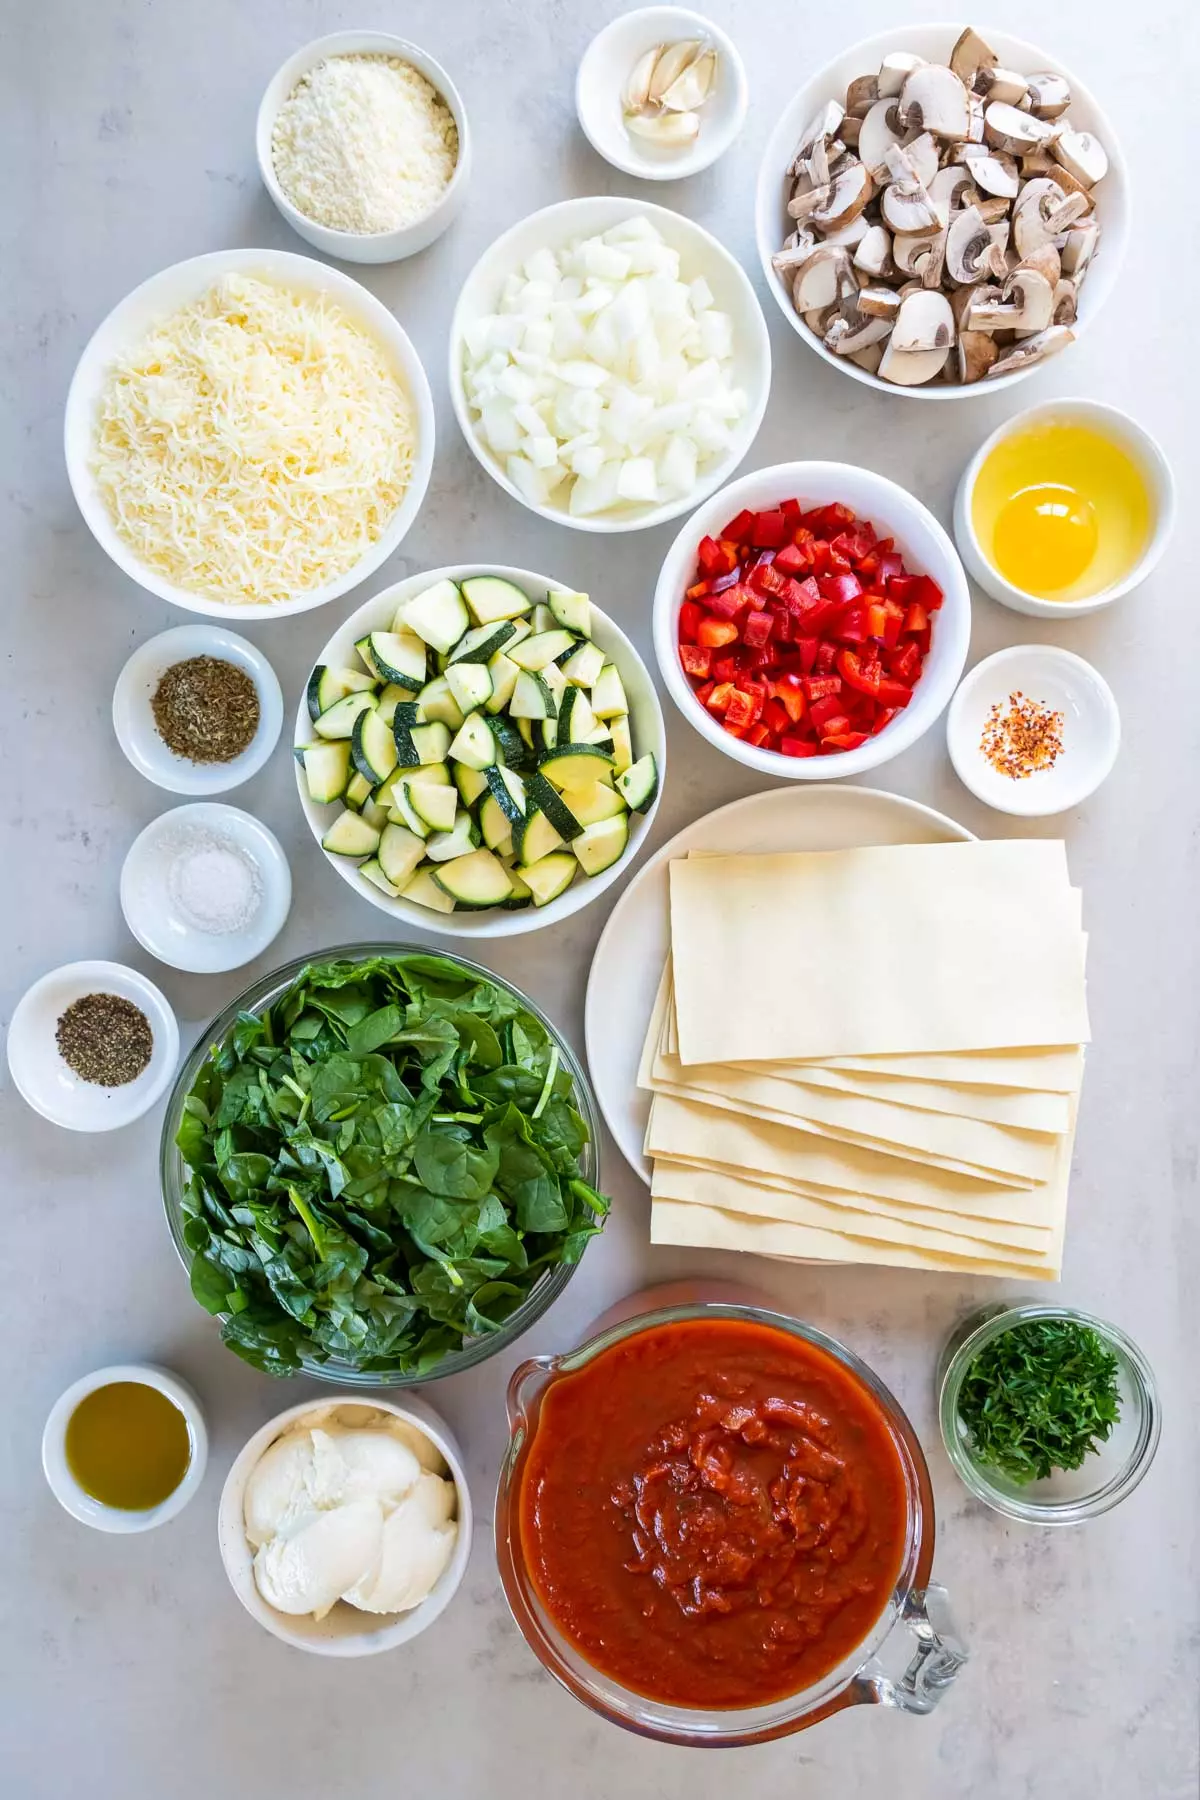 Ingredients for vegetable lasagna recipe.